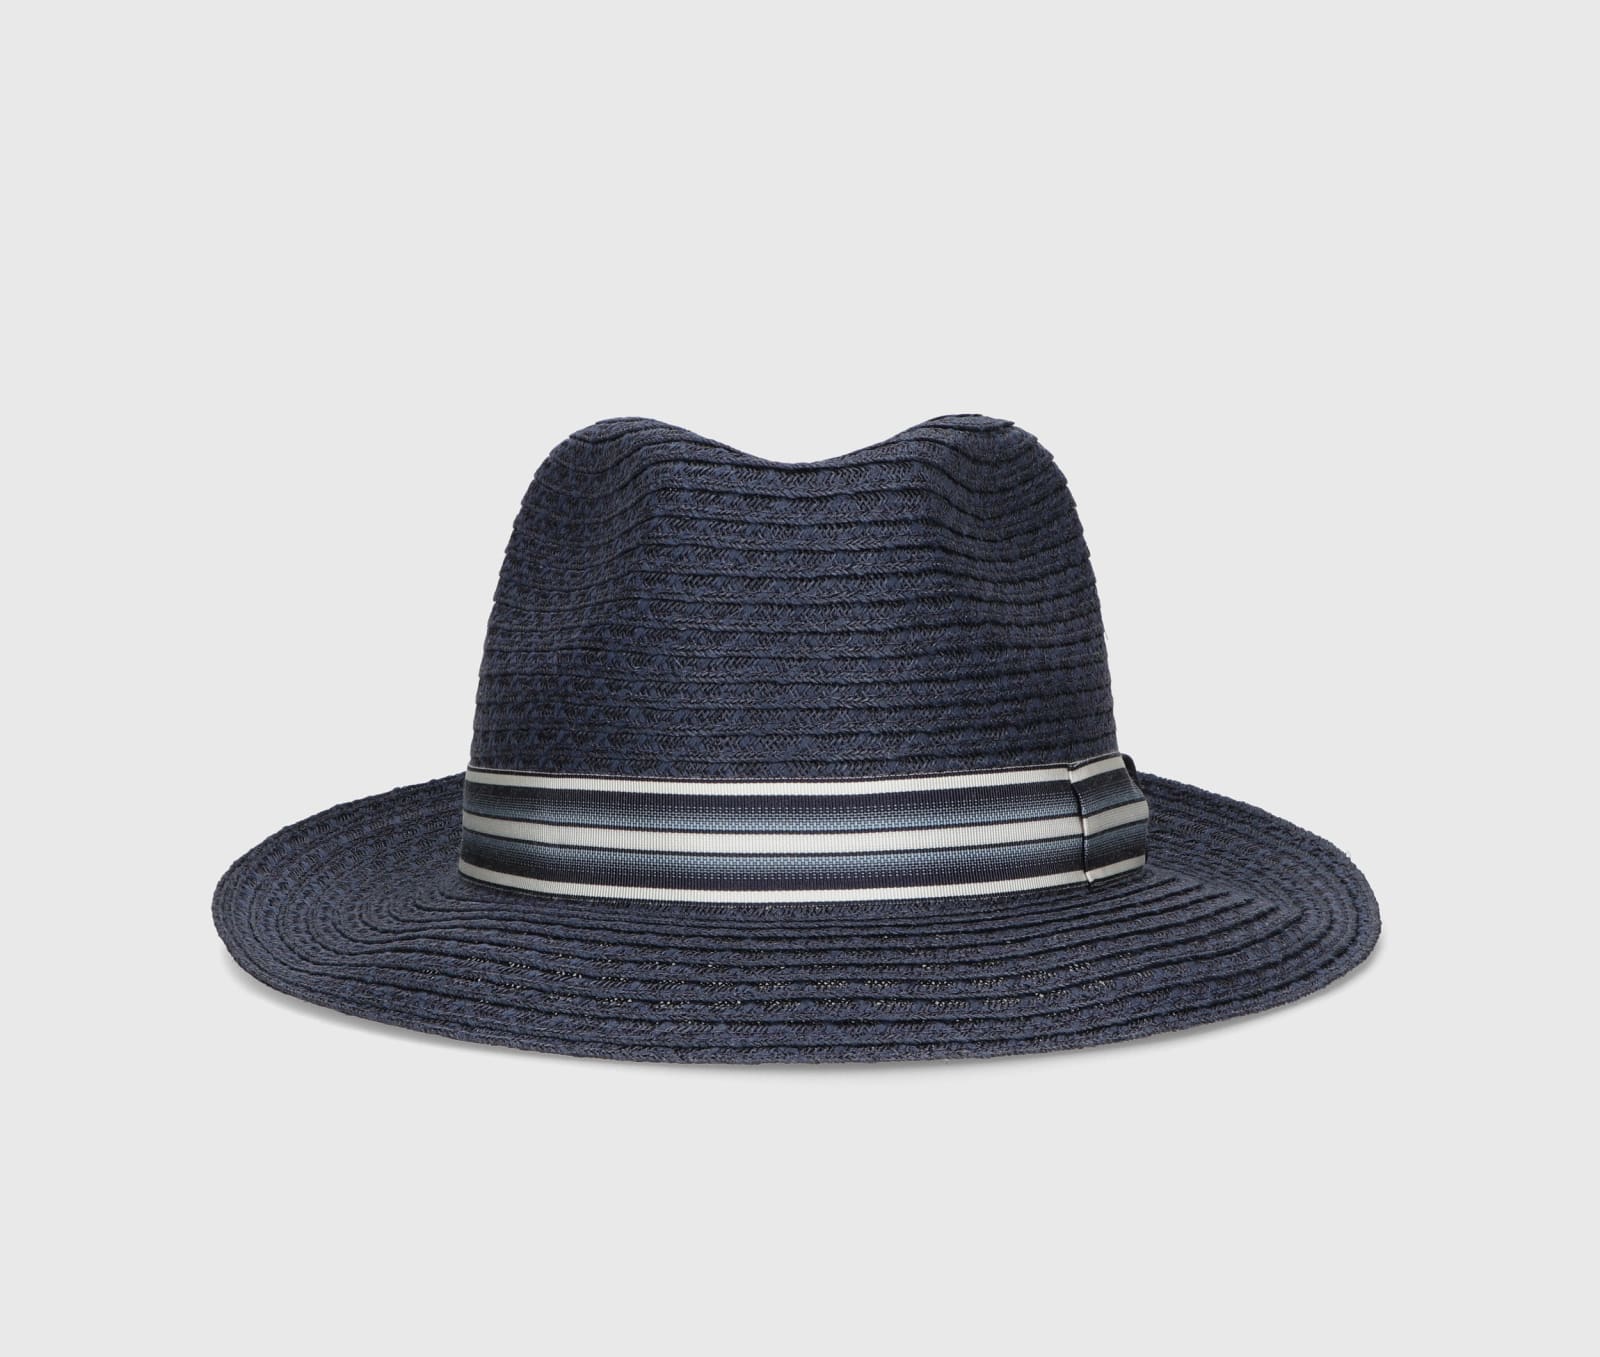 Shop Borsalino Edward Braided Cotton Hemp In Navy Blue, Blue/white Hat Band